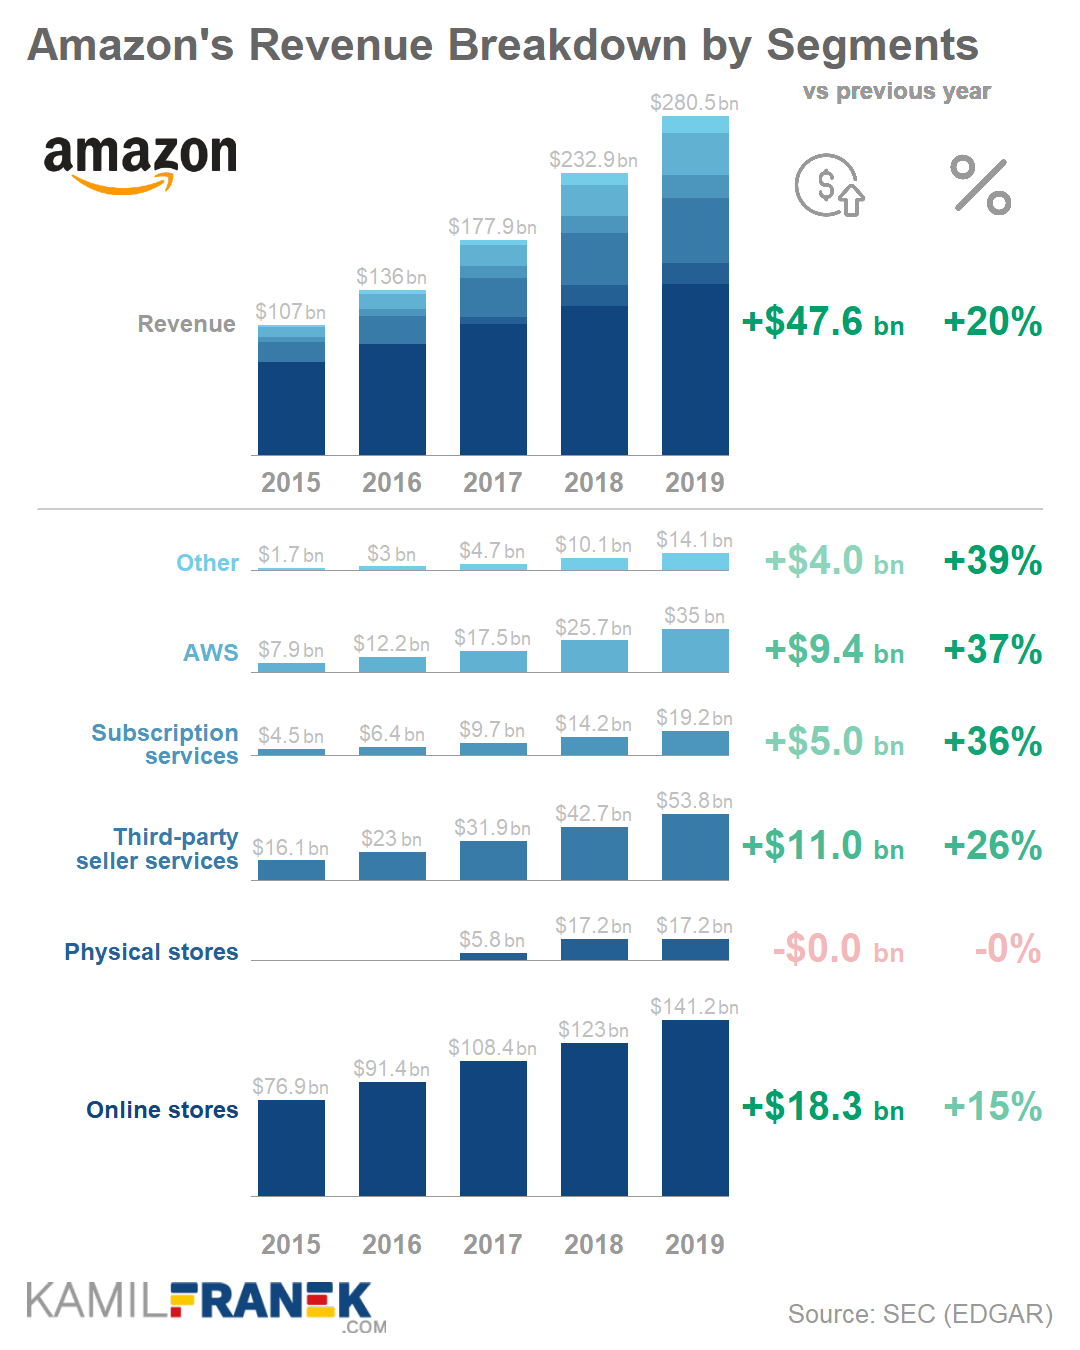 Amazon Price Chart History